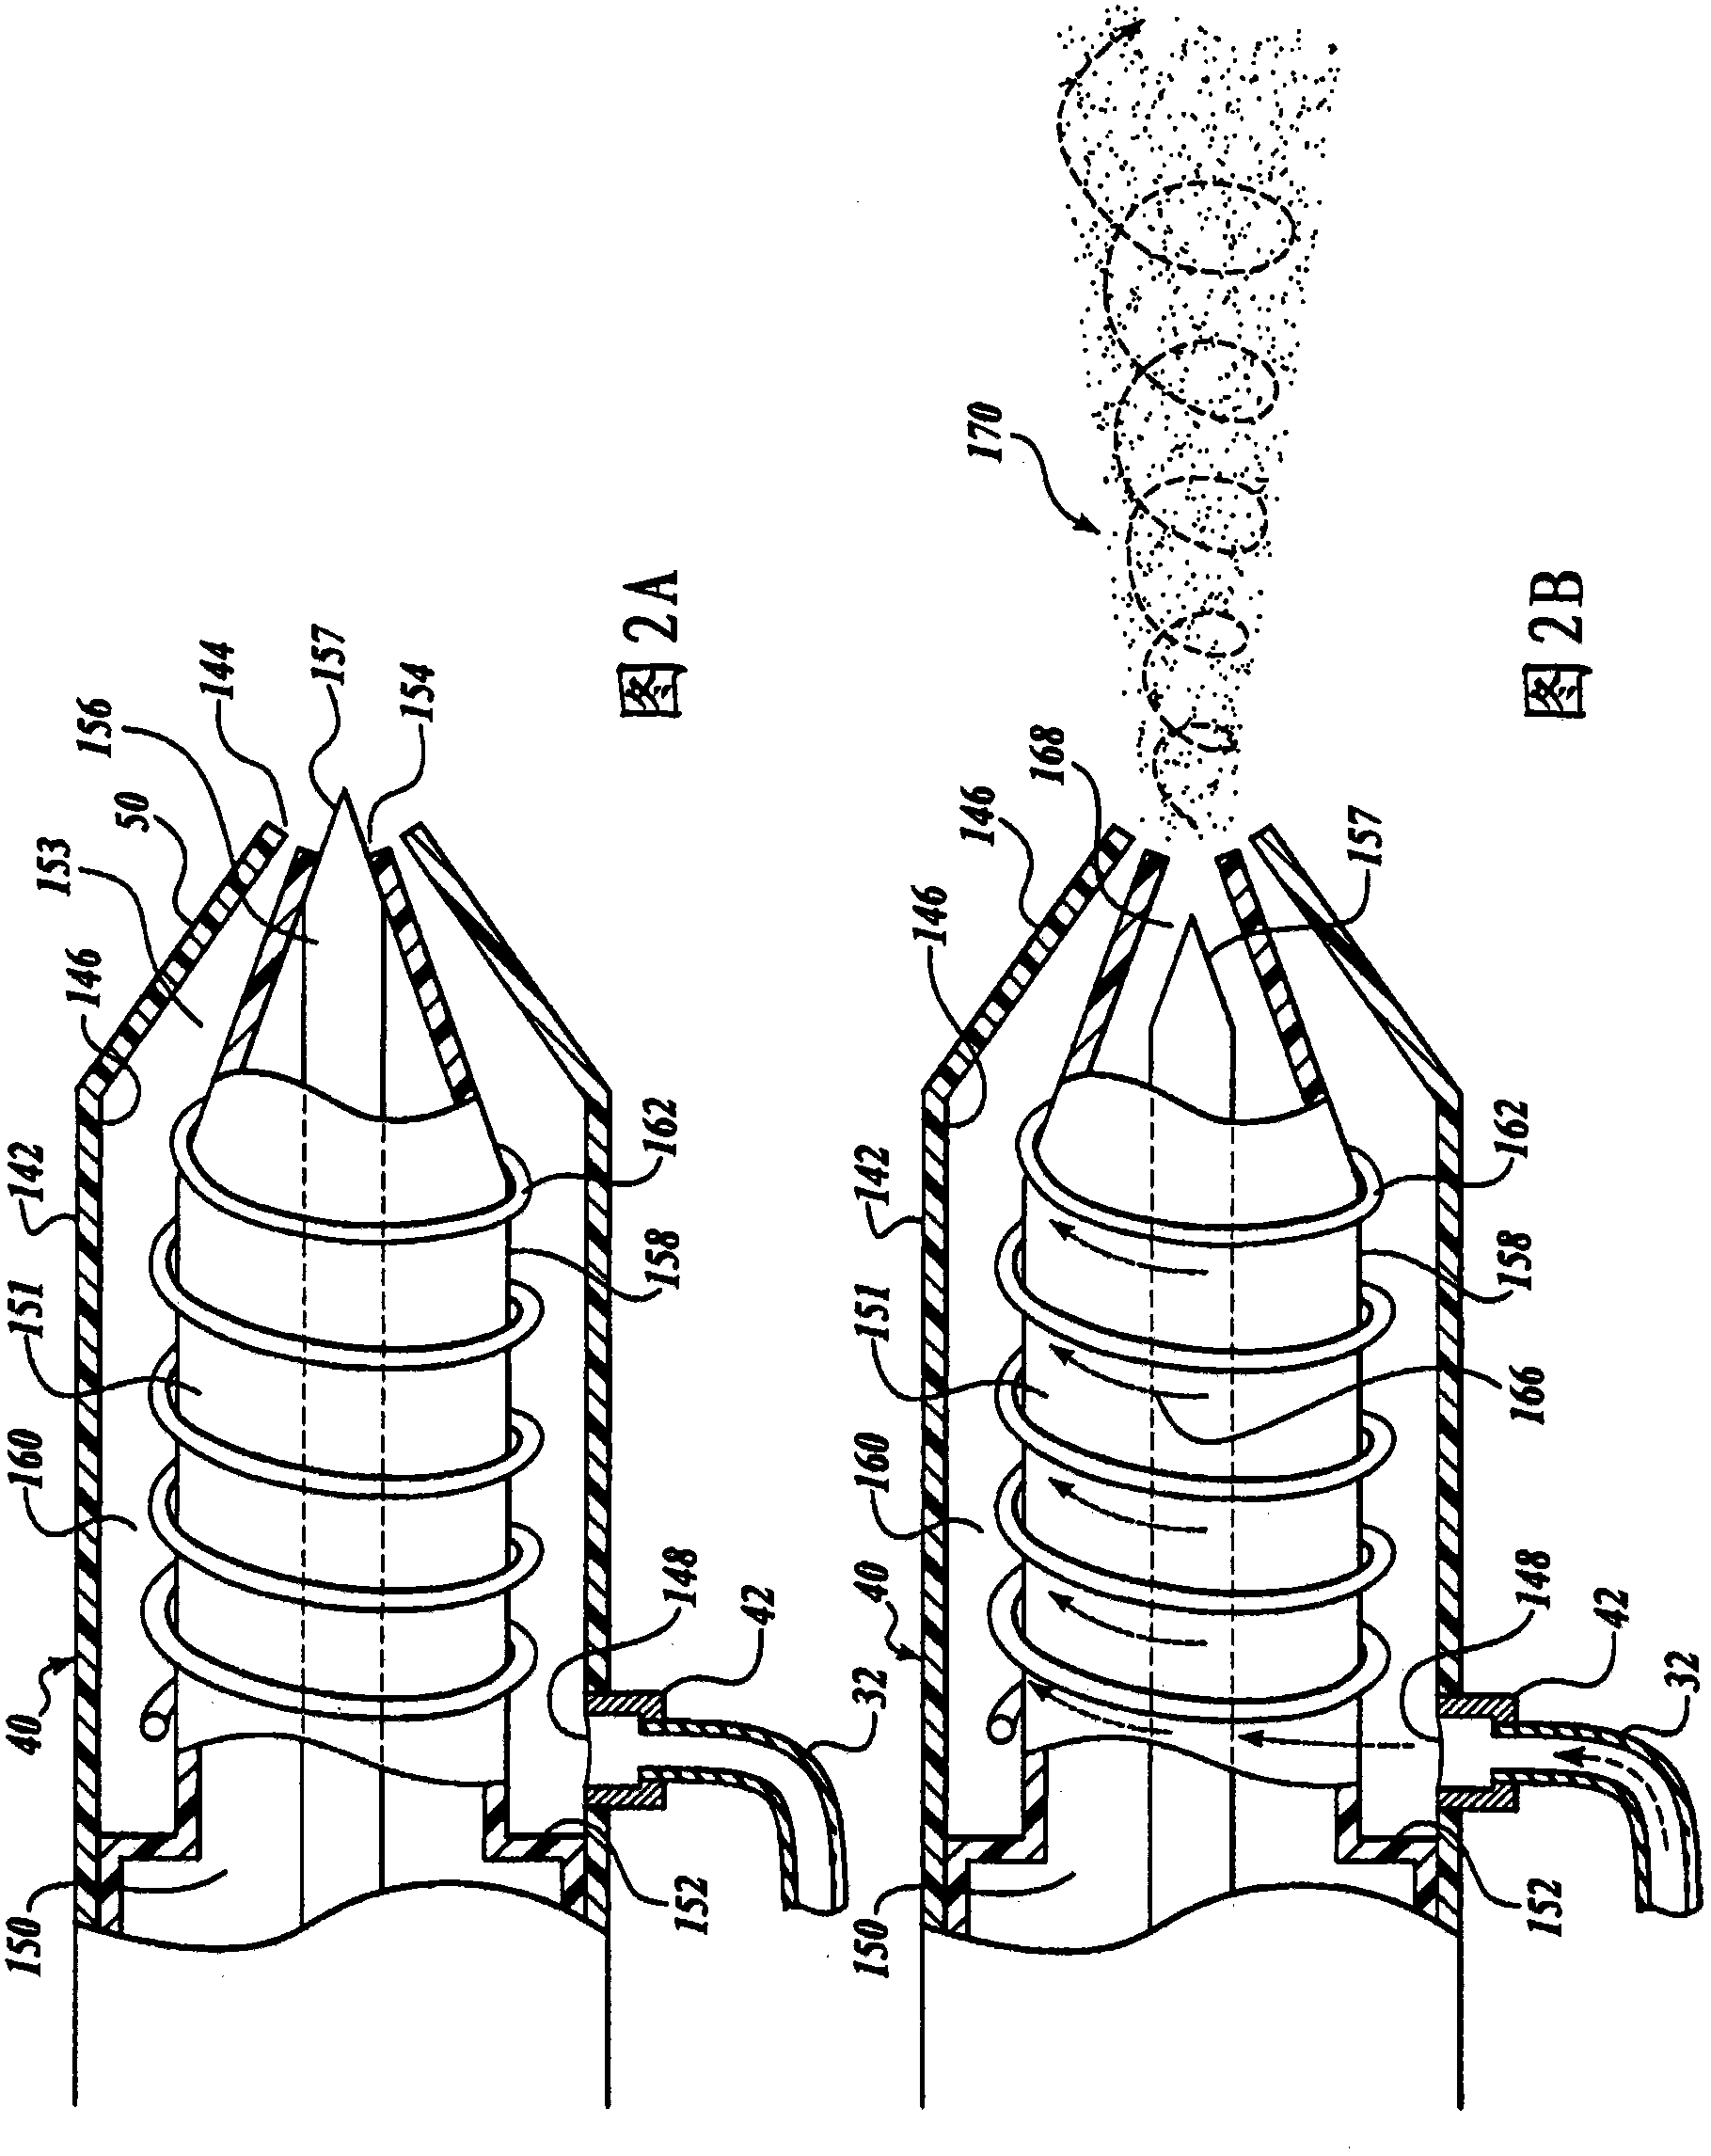 Circumferential aerosol device